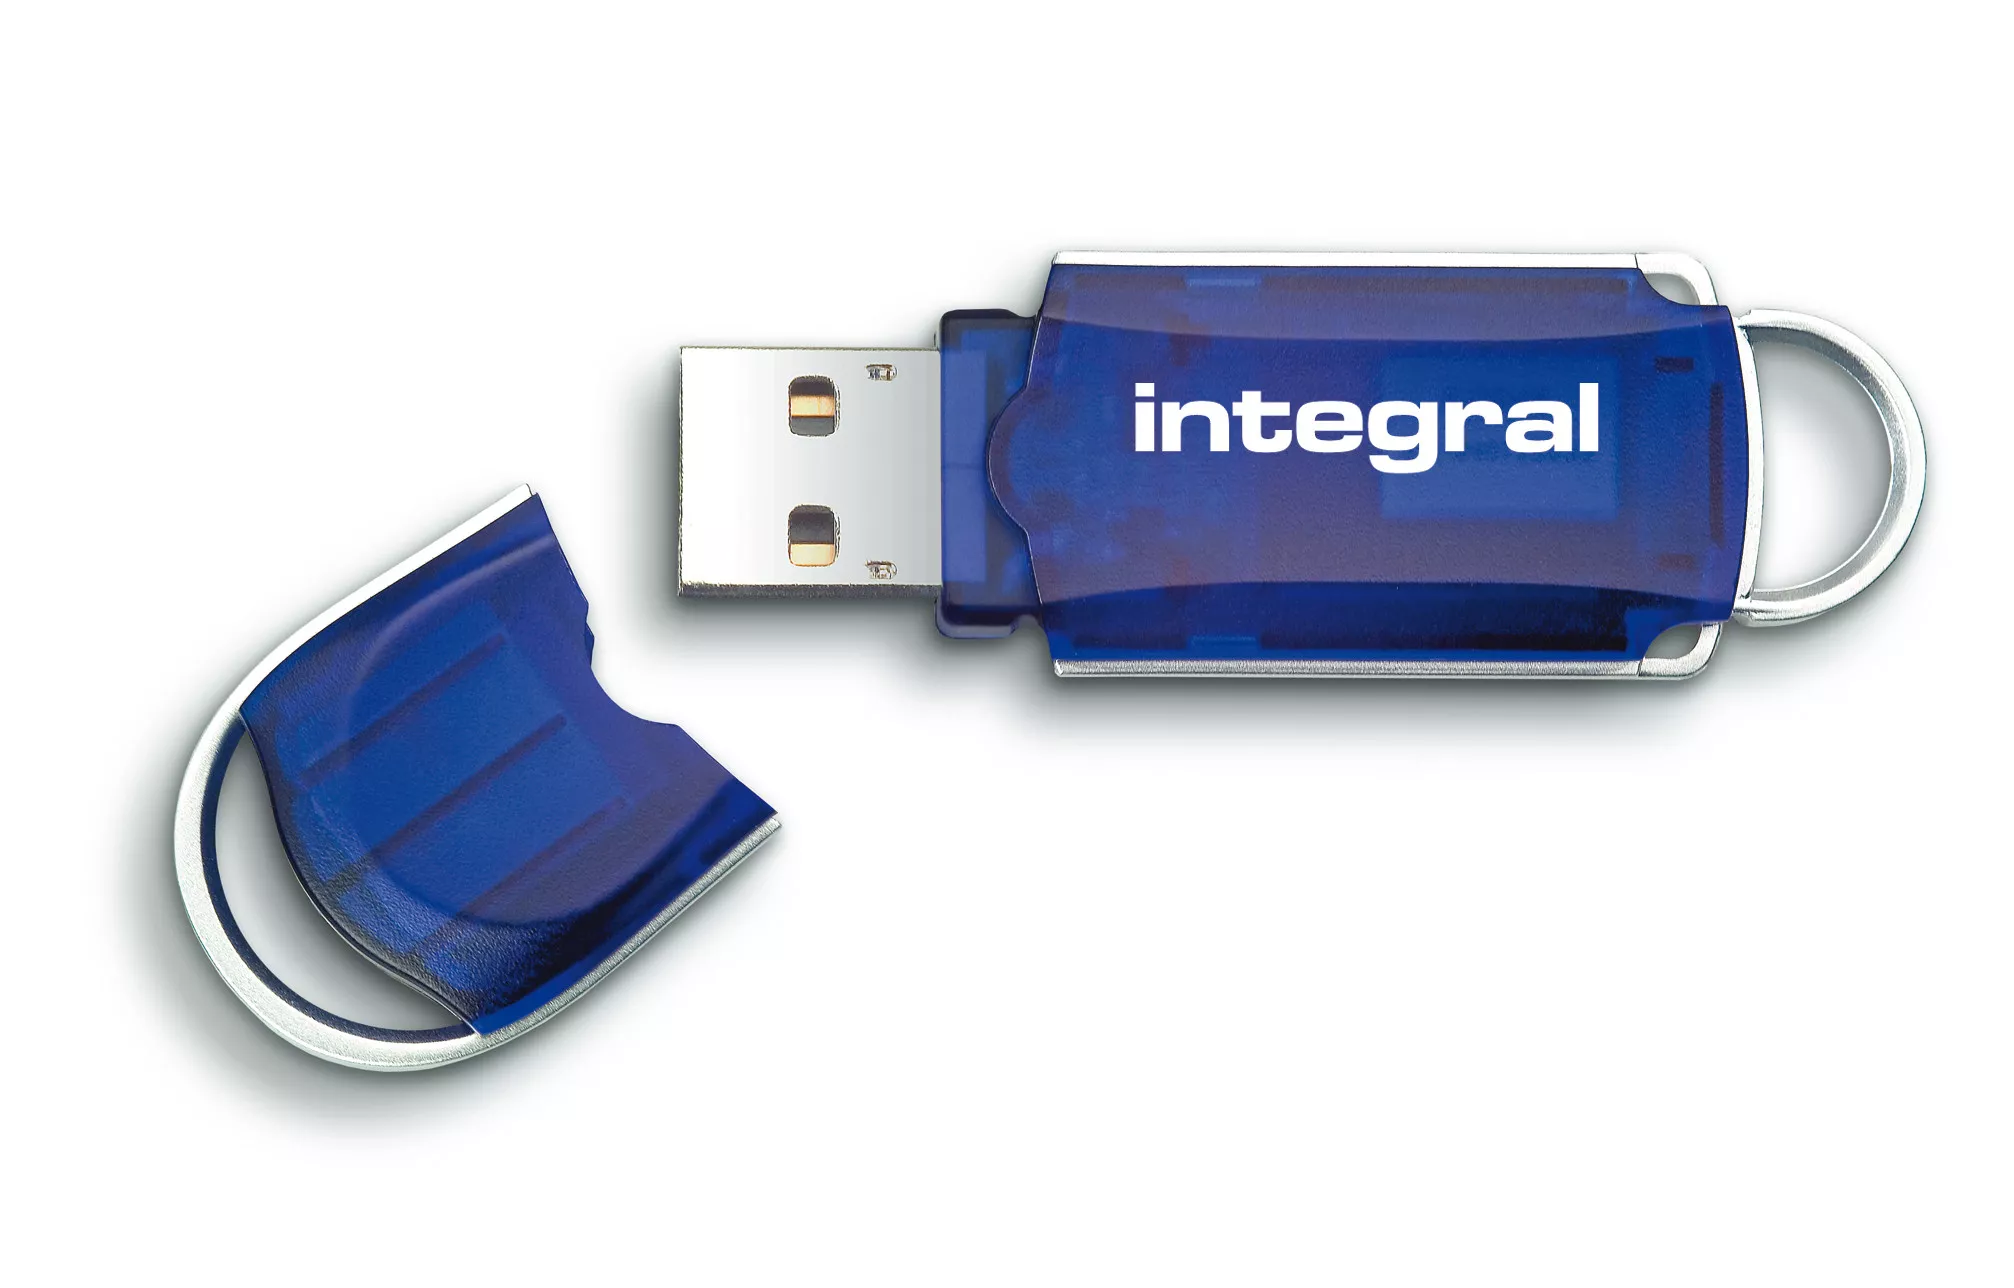 Vente Adaptateur stockage Integral 8GB USB2.0 DRIVE COURIER BLUE INTEGRAL